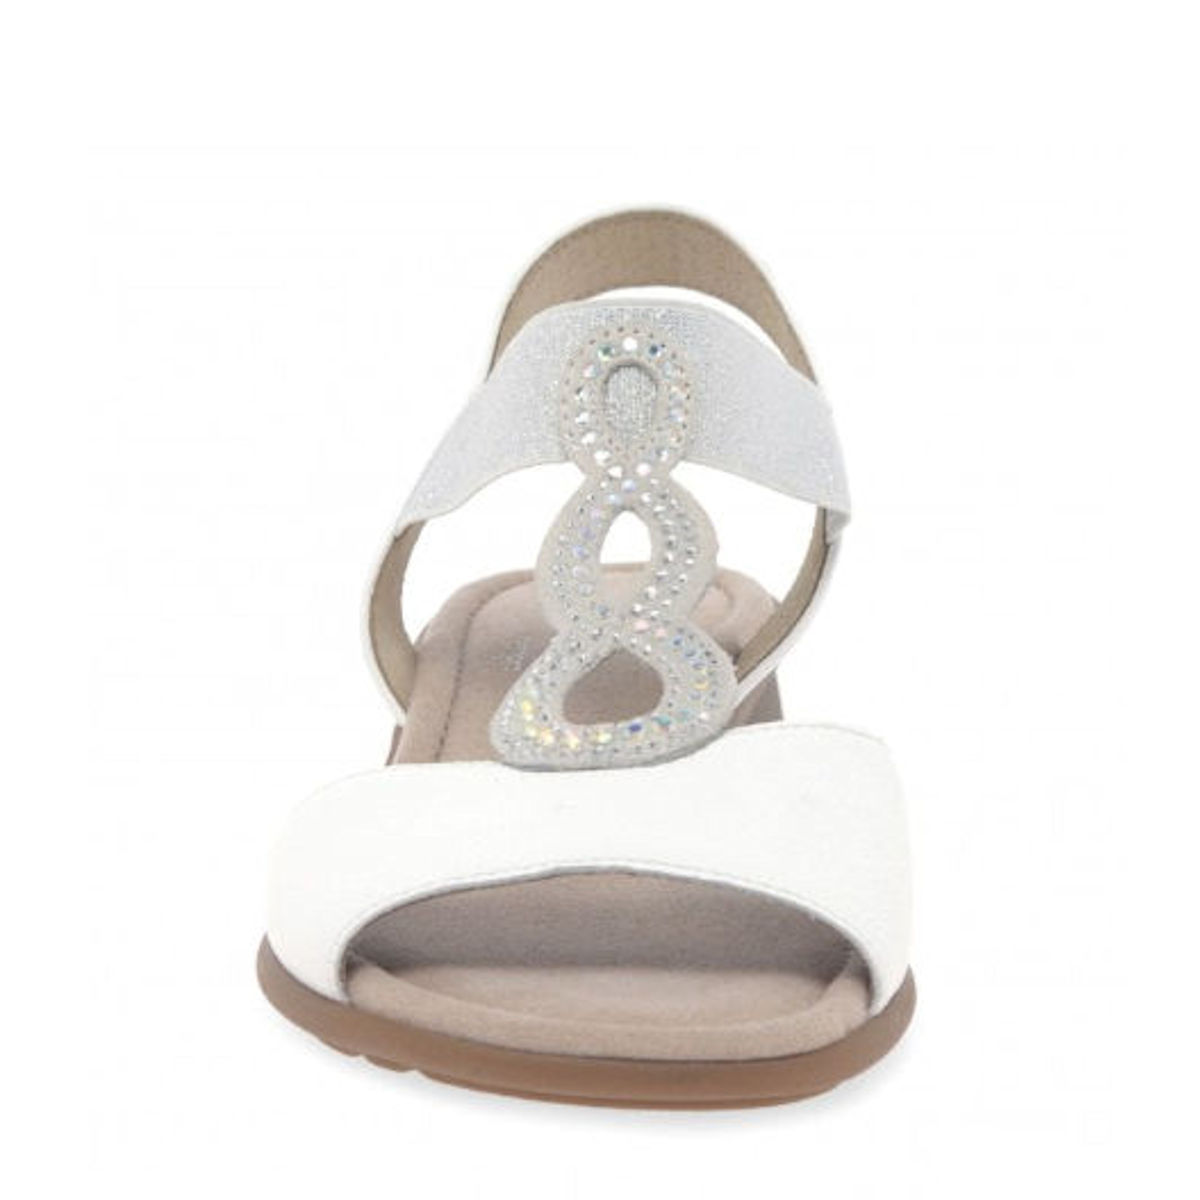 Gabor Merlin - Womens Embellished Open Toe White Flat Sandals